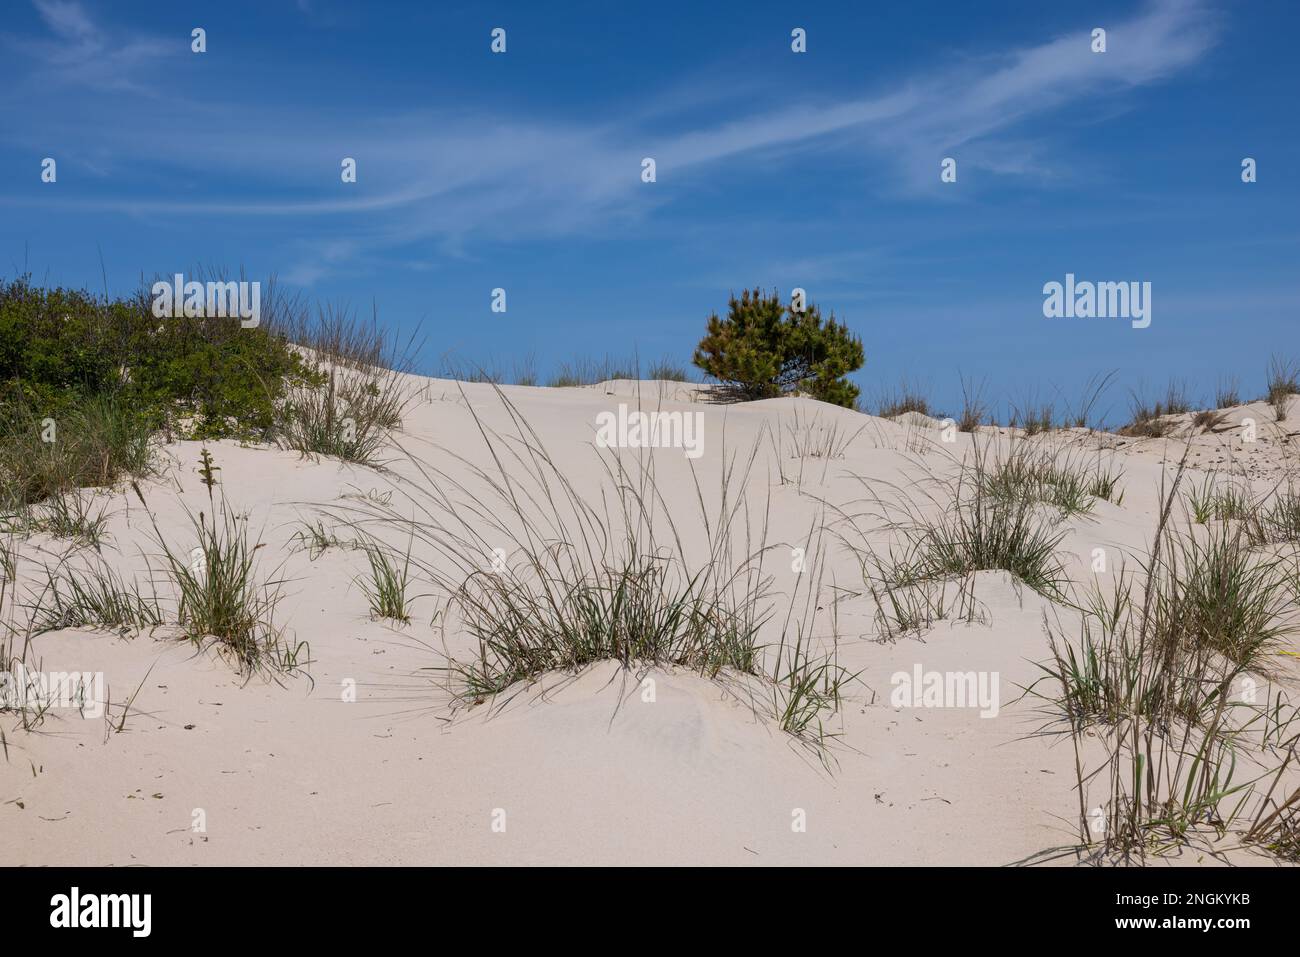 Grasses in a sand dune, Delaware Seashore State Park, Dewey Beach, Delaware Stock Photo